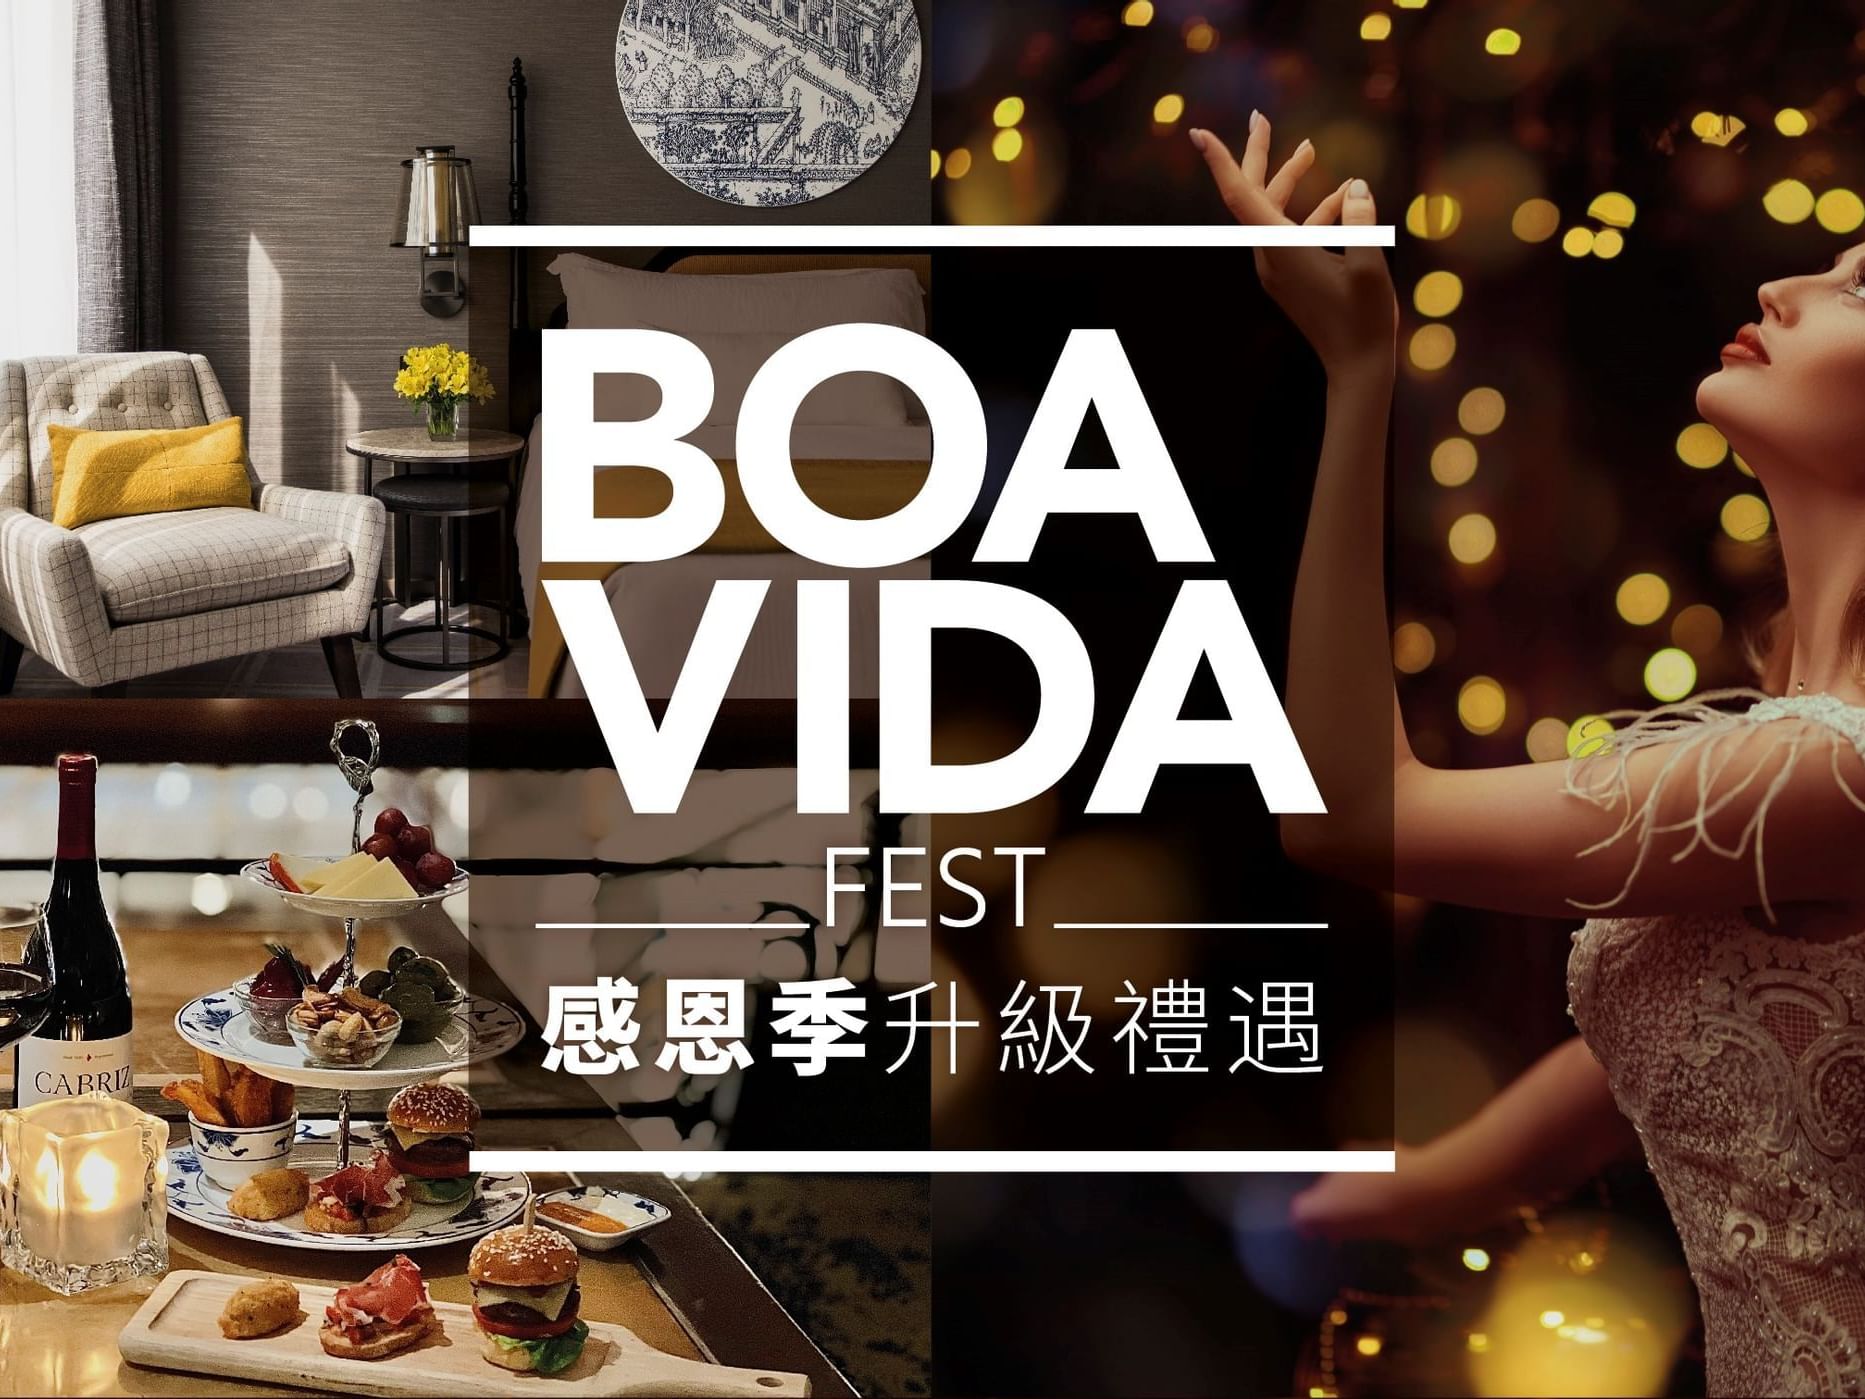 Boa Vida fest poster used at Artyzen Grand Lapa Hotel